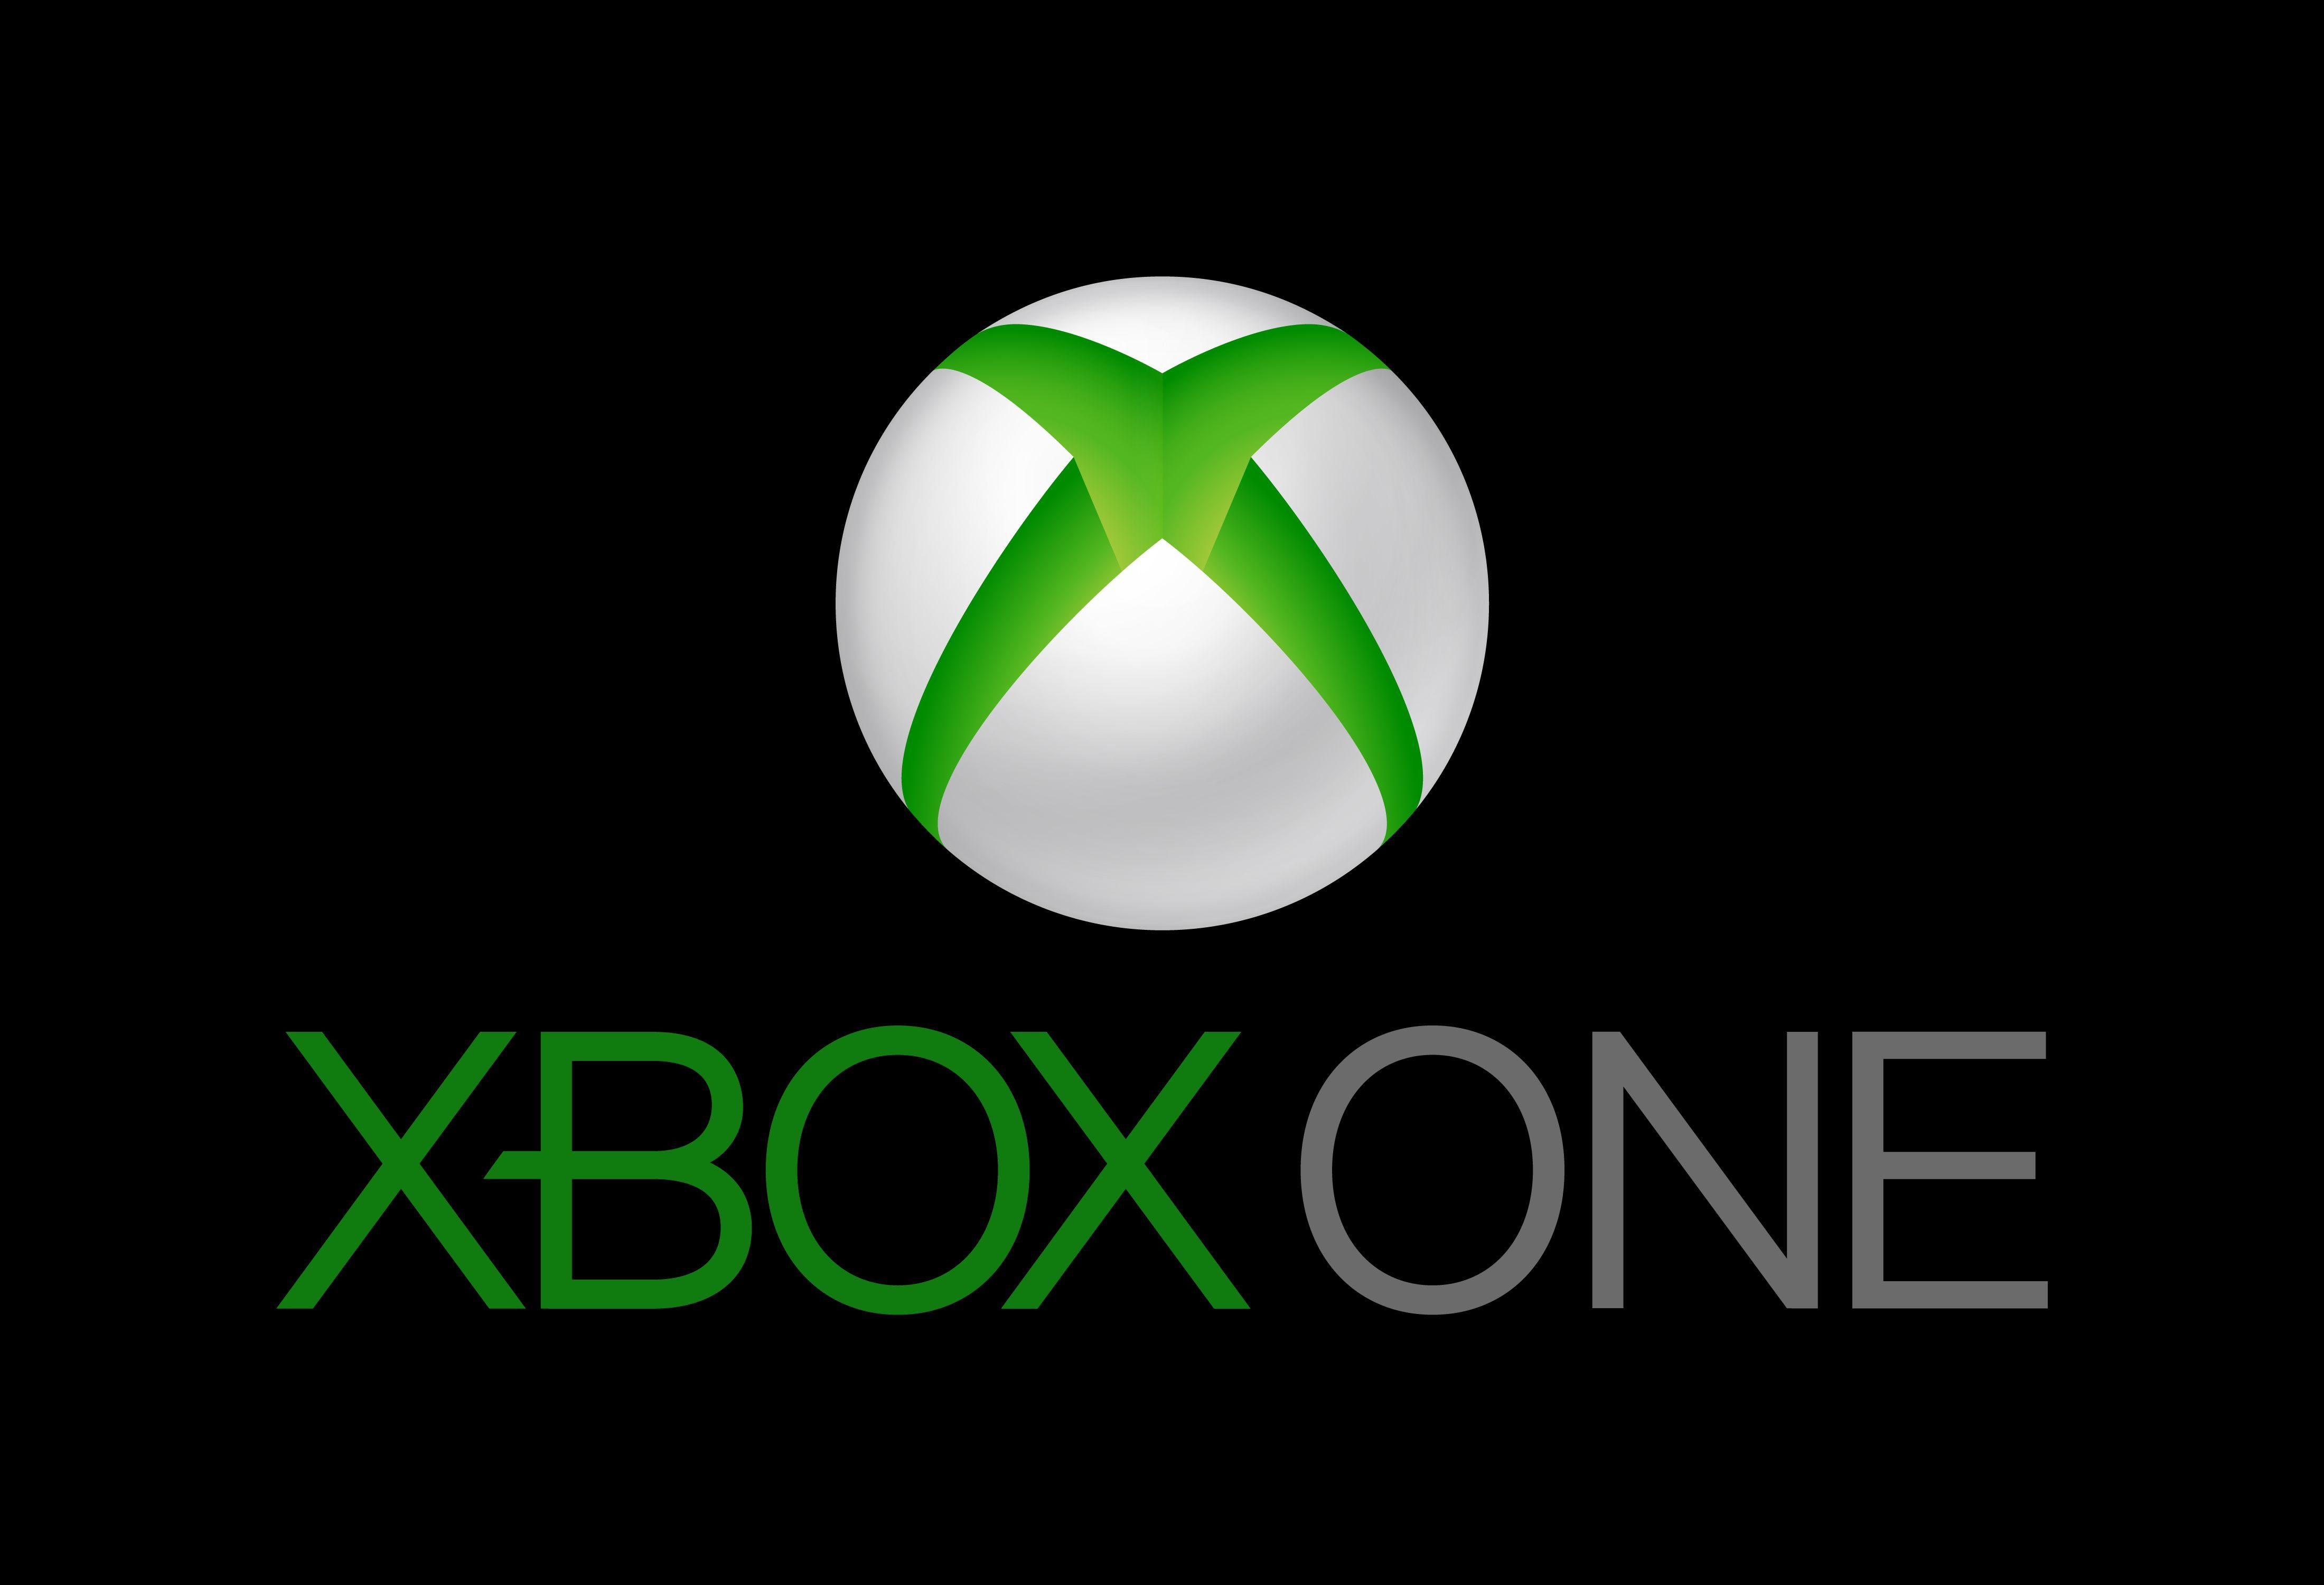 Xbox live games. Xbox 360 Live. Xbox Live Xbox 360. Microsoft Xbox 360 logo. Xbox one лого.